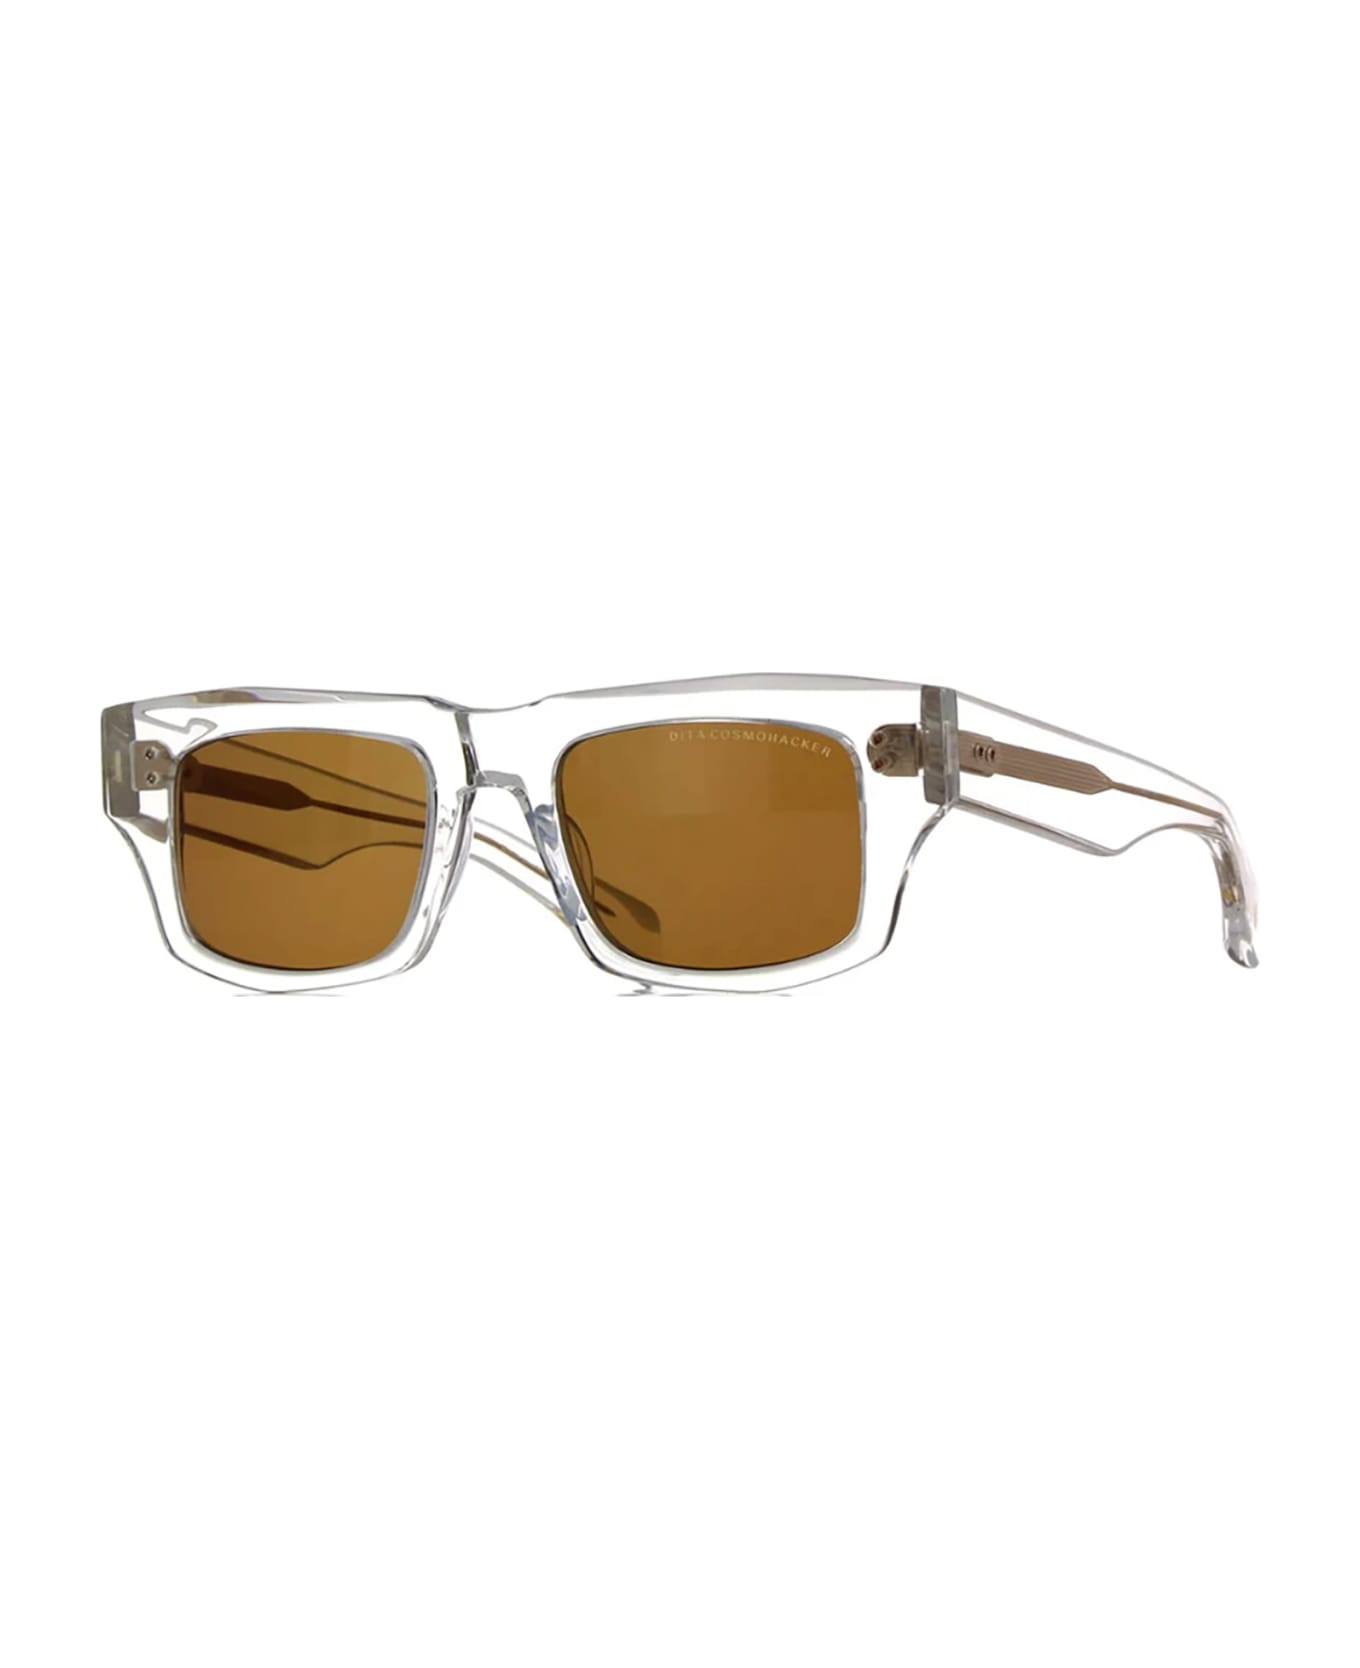 Dita DTS727/A/02 COSMOHACKER Sunglasses - Crystal Clear サングラス